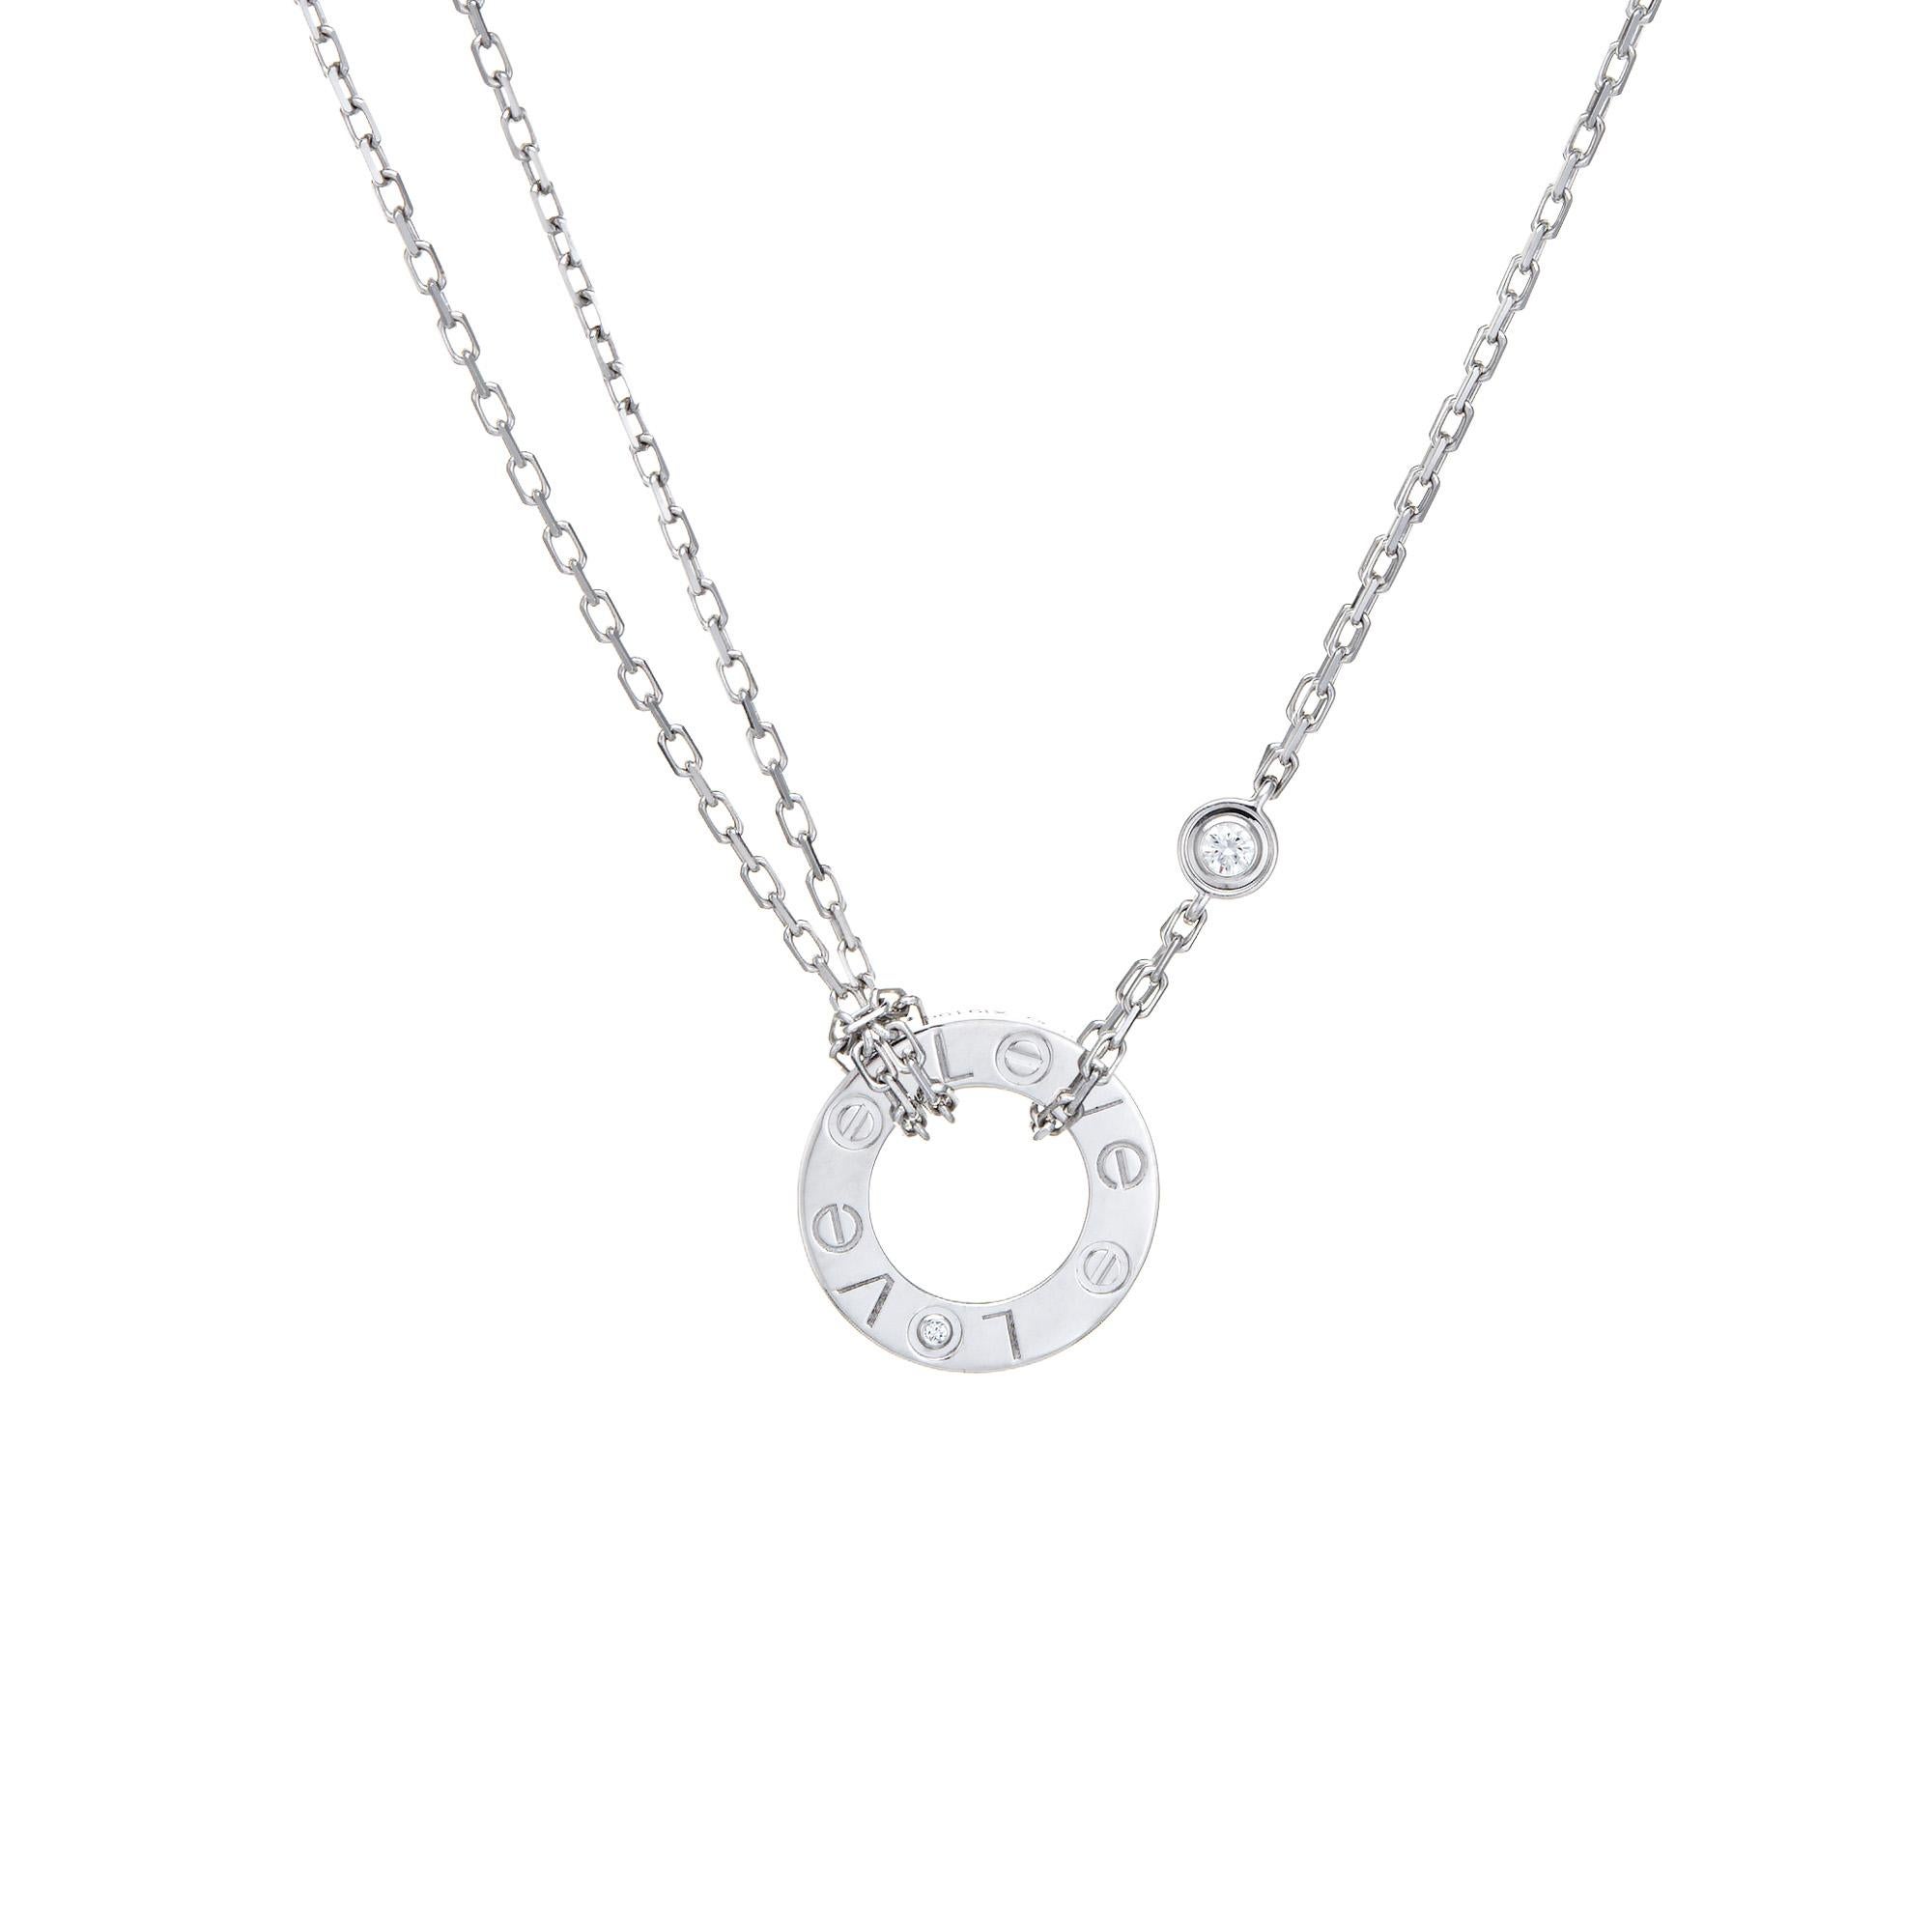 Taille ronde Cartier Diamond Love Necklace 18k White Gold Estate Jewelry Receipt 16